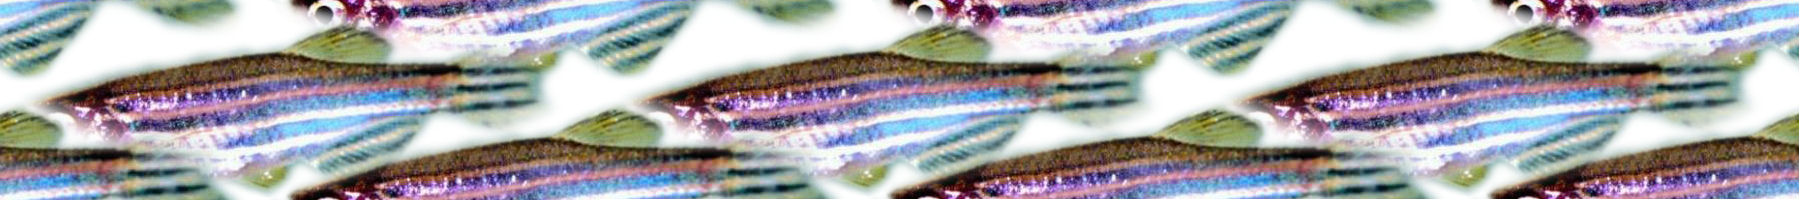 Adult zebrafish